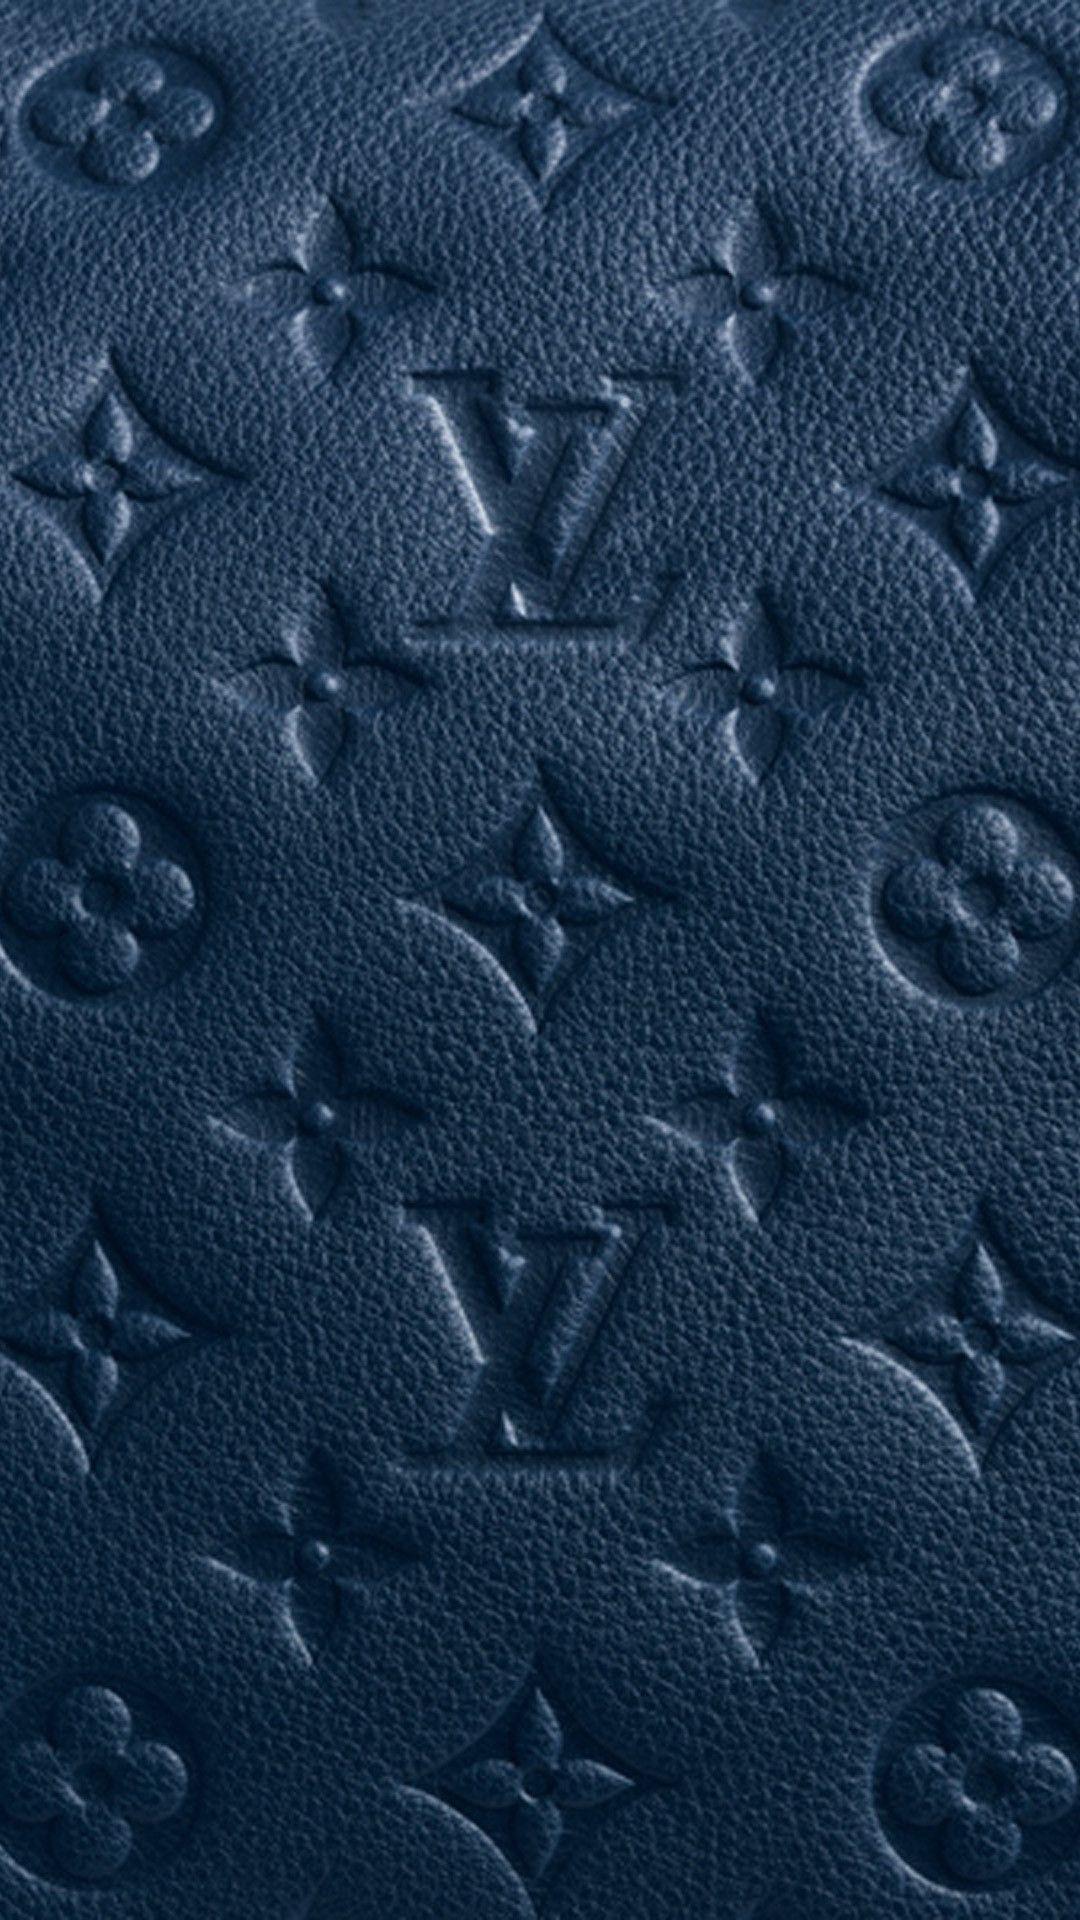 Louis Vuitton Blue Wallpapers - Top Free Louis Vuitton Blue